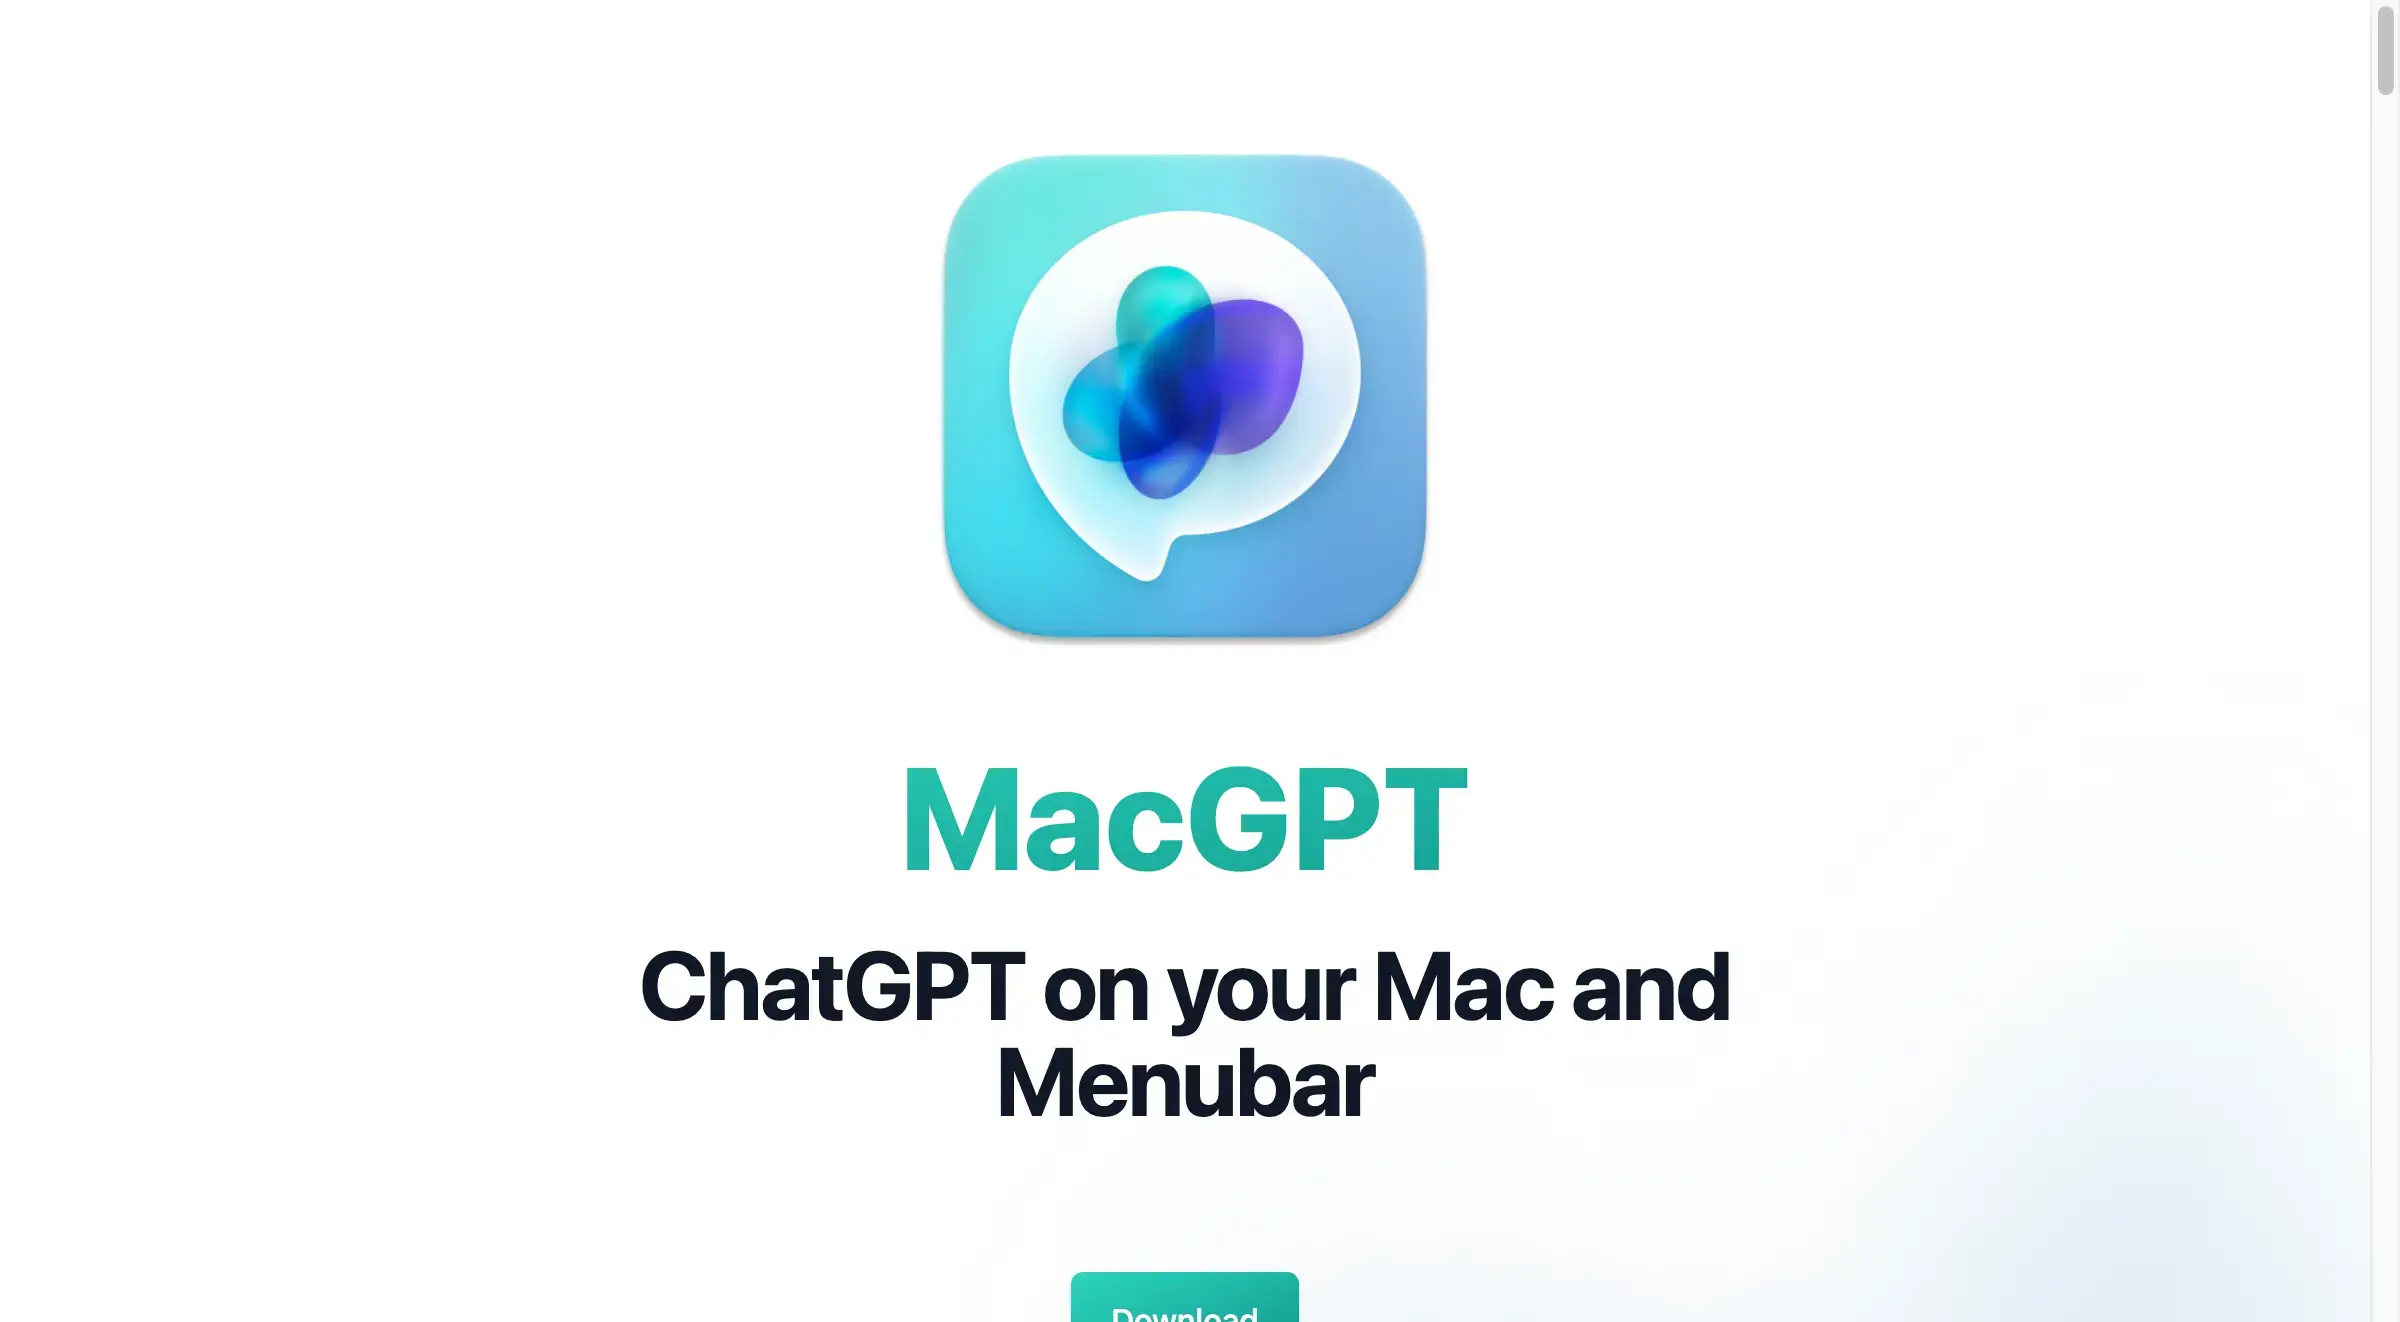 ChatGPT on your Mac and menubar